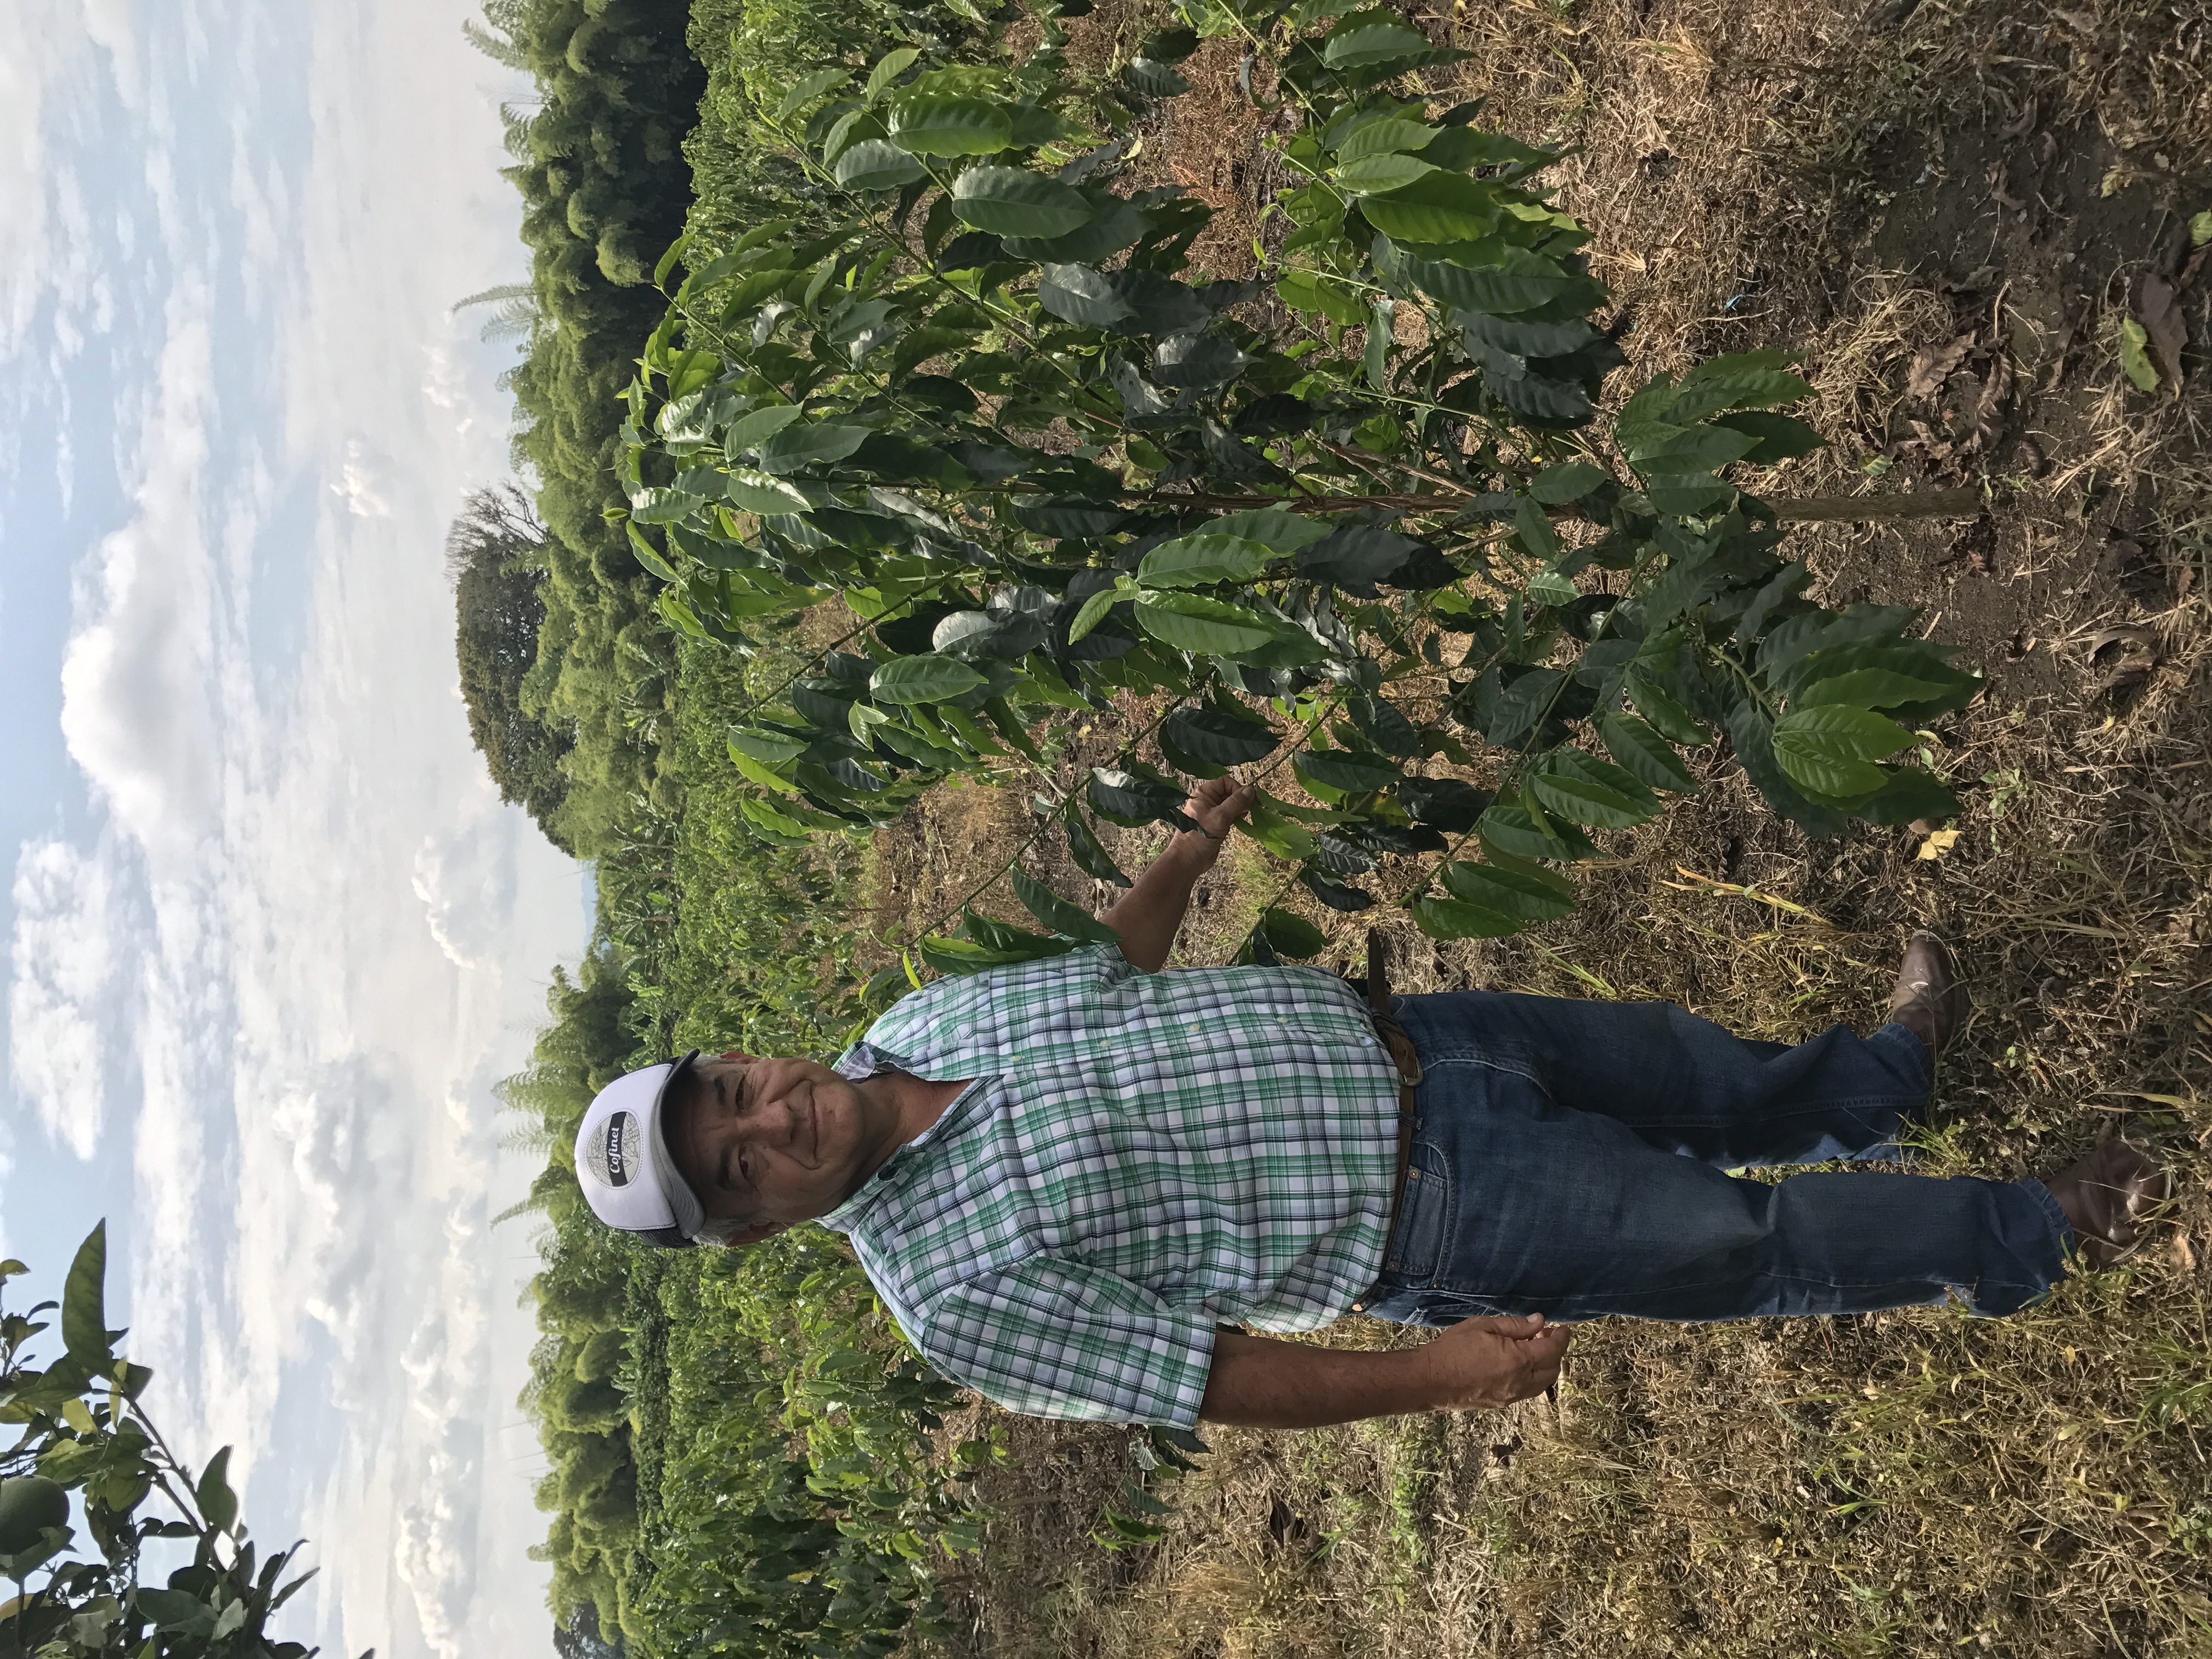 Coffee farmer Jairo Arcila stood next to his coffee tree crops